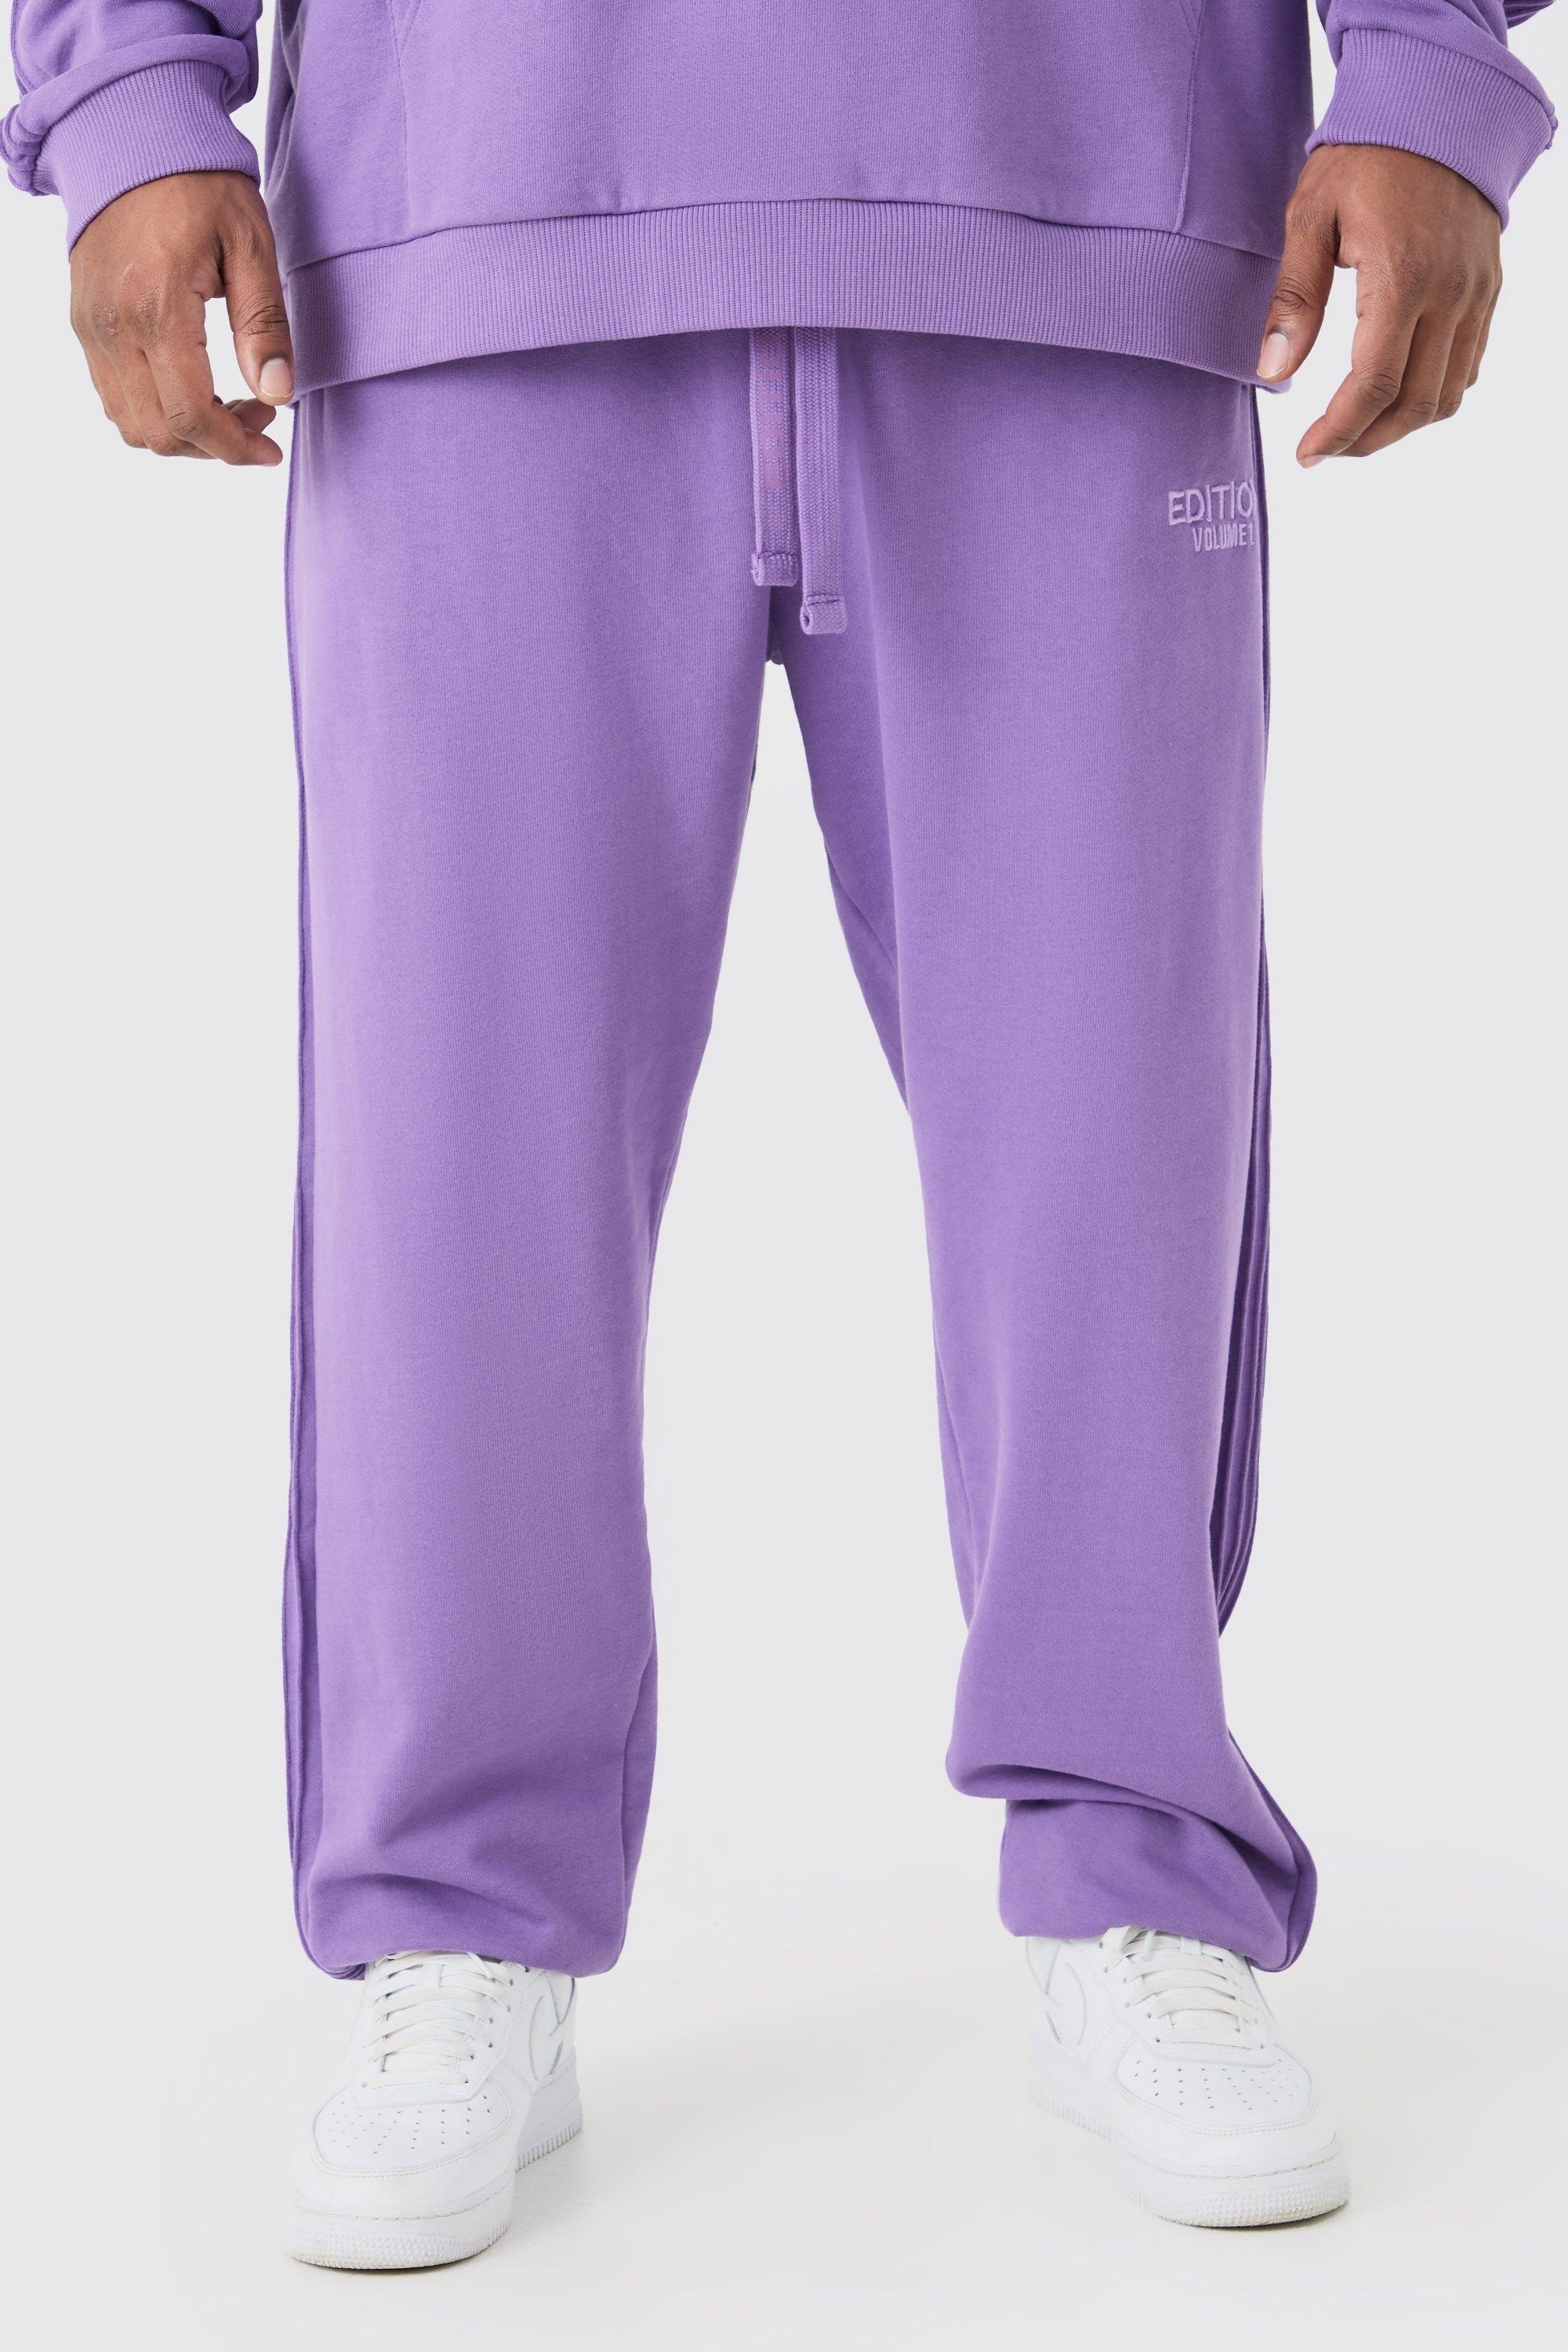 plus oversized pintuck detail heavyweight jogger - purple - xxxl, purple